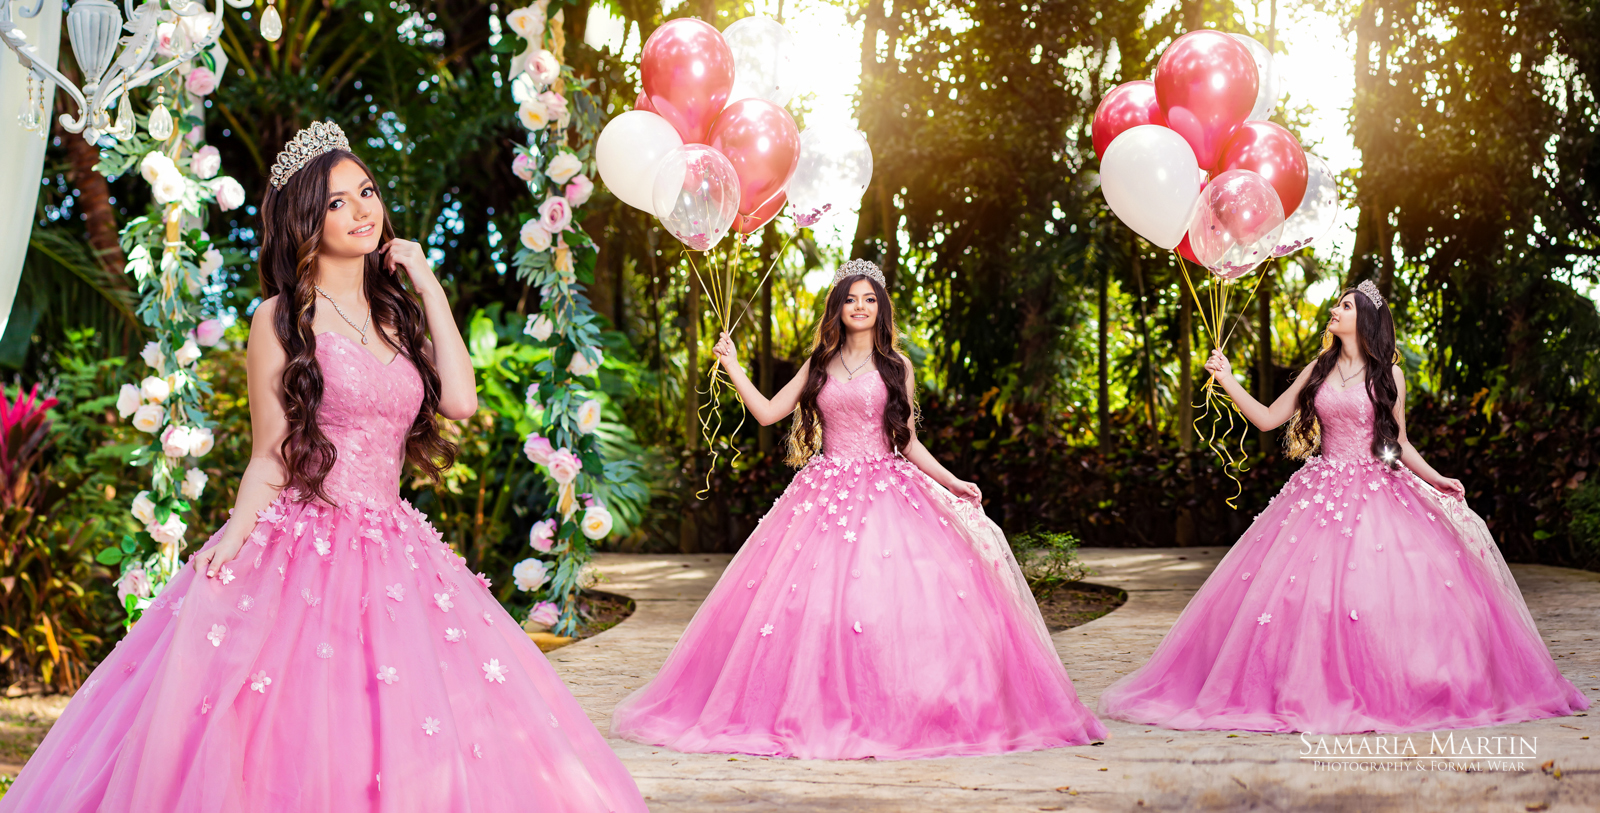 Miami Dress Rental, Morilee dresses, pink quinceanera dresses, quinceanera dresses near me, best Miami photographer 4